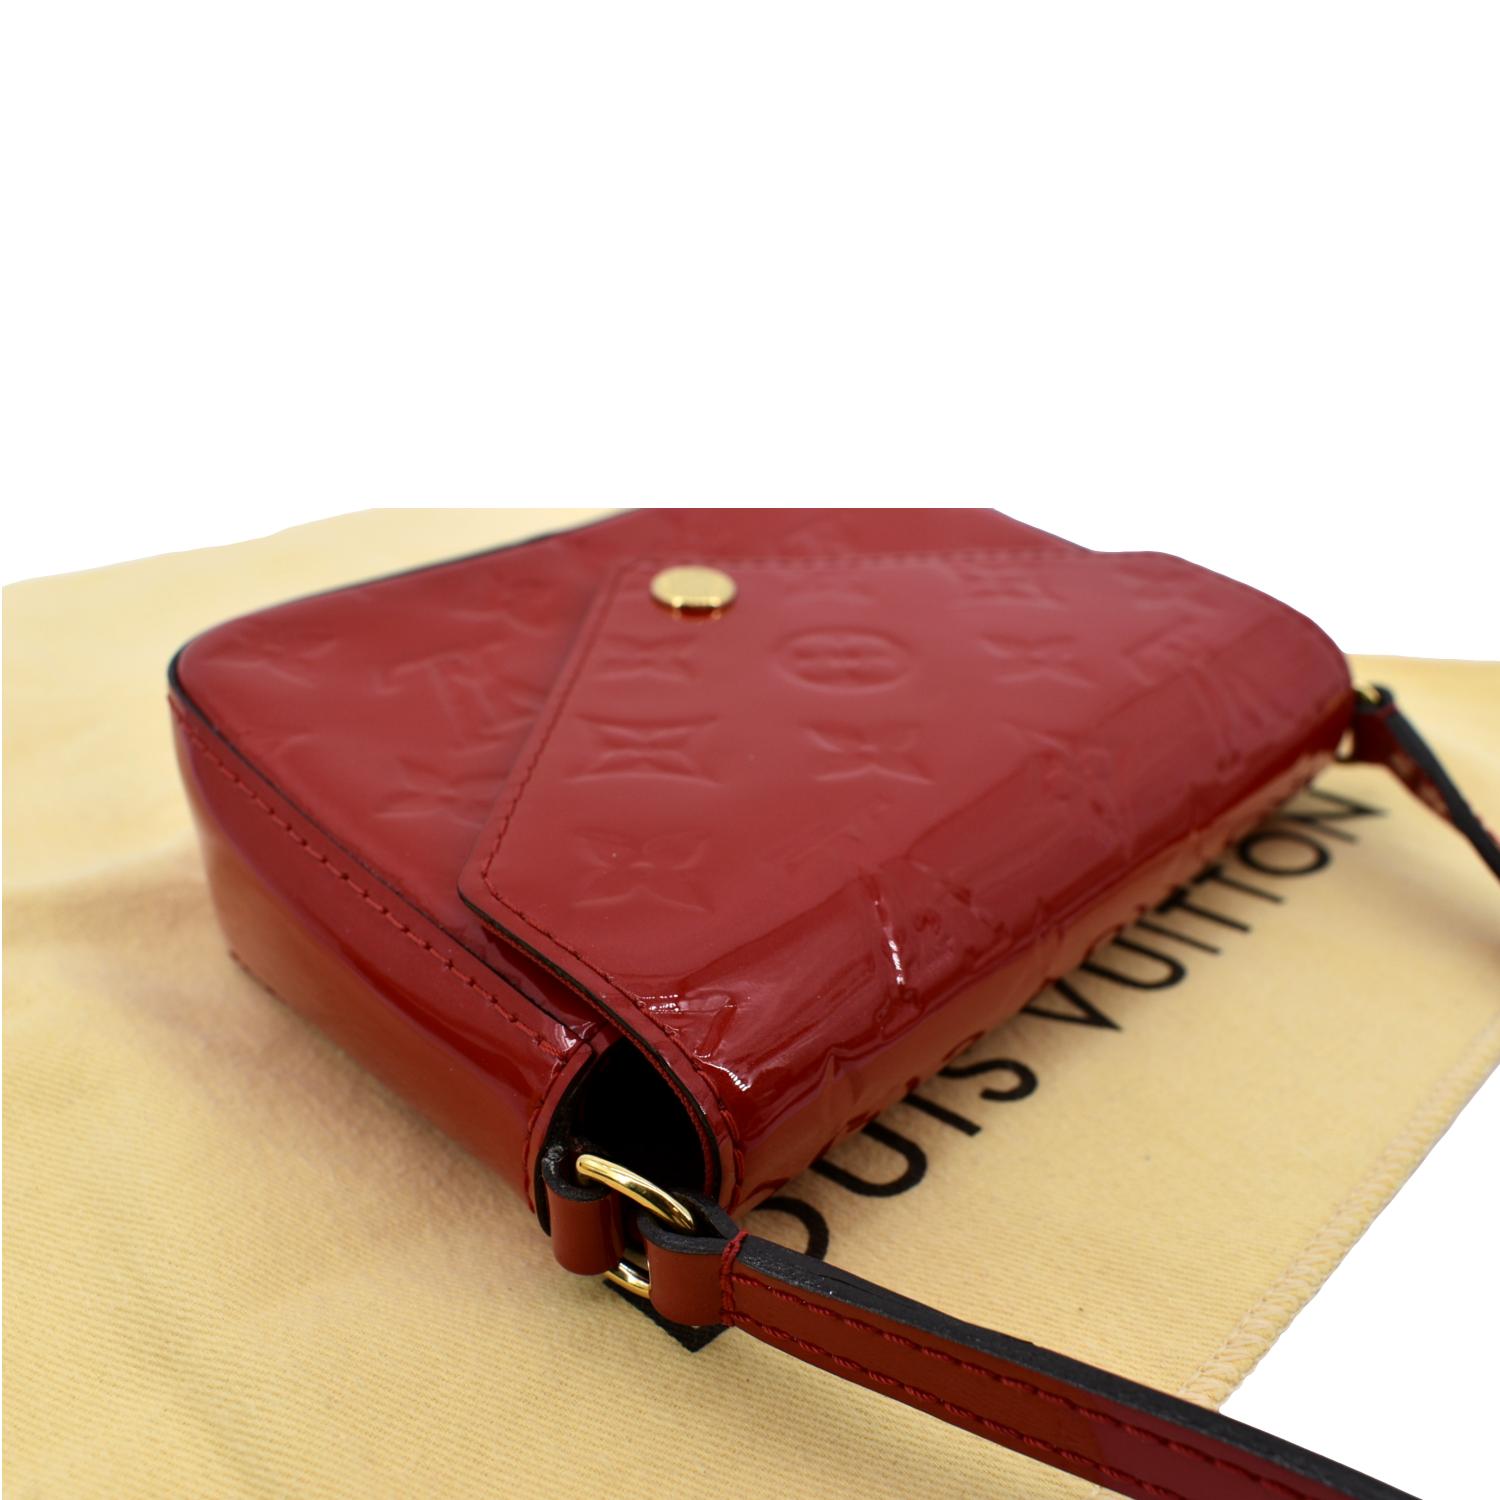 Louis Vuitton Patent leather crossbody bag - ShopStyle